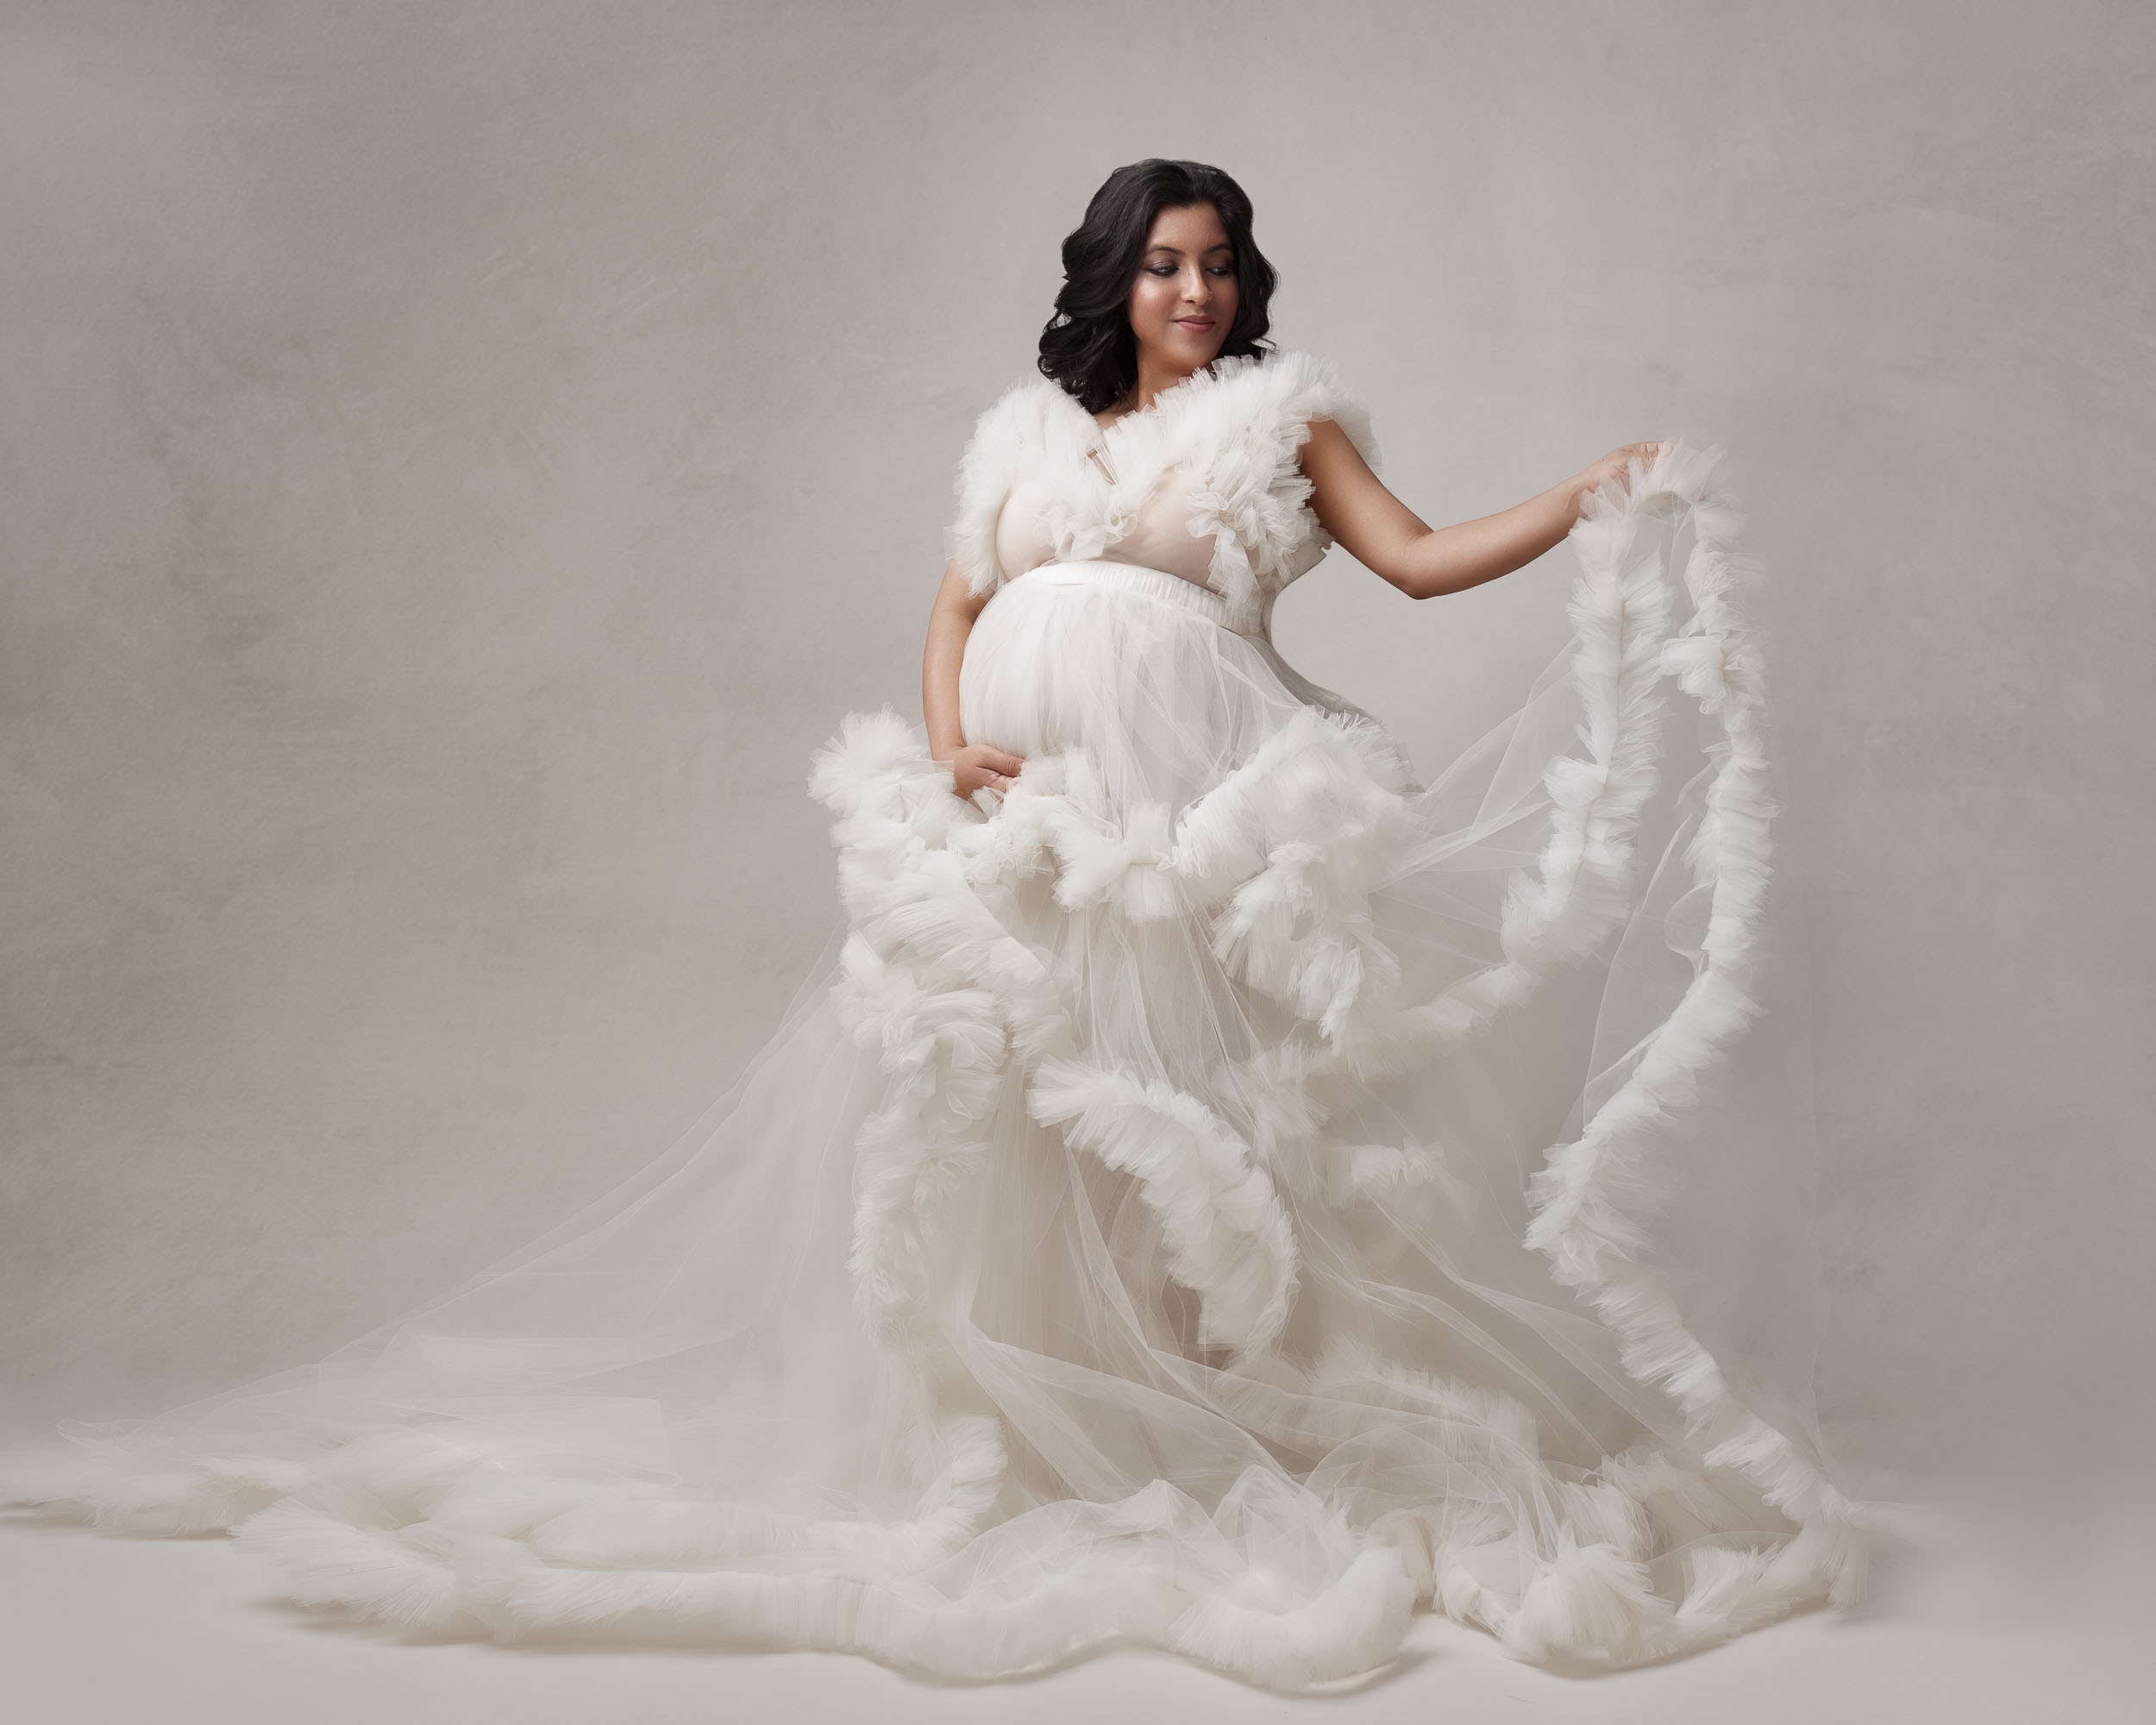 Pregnancy Sample - White Dress